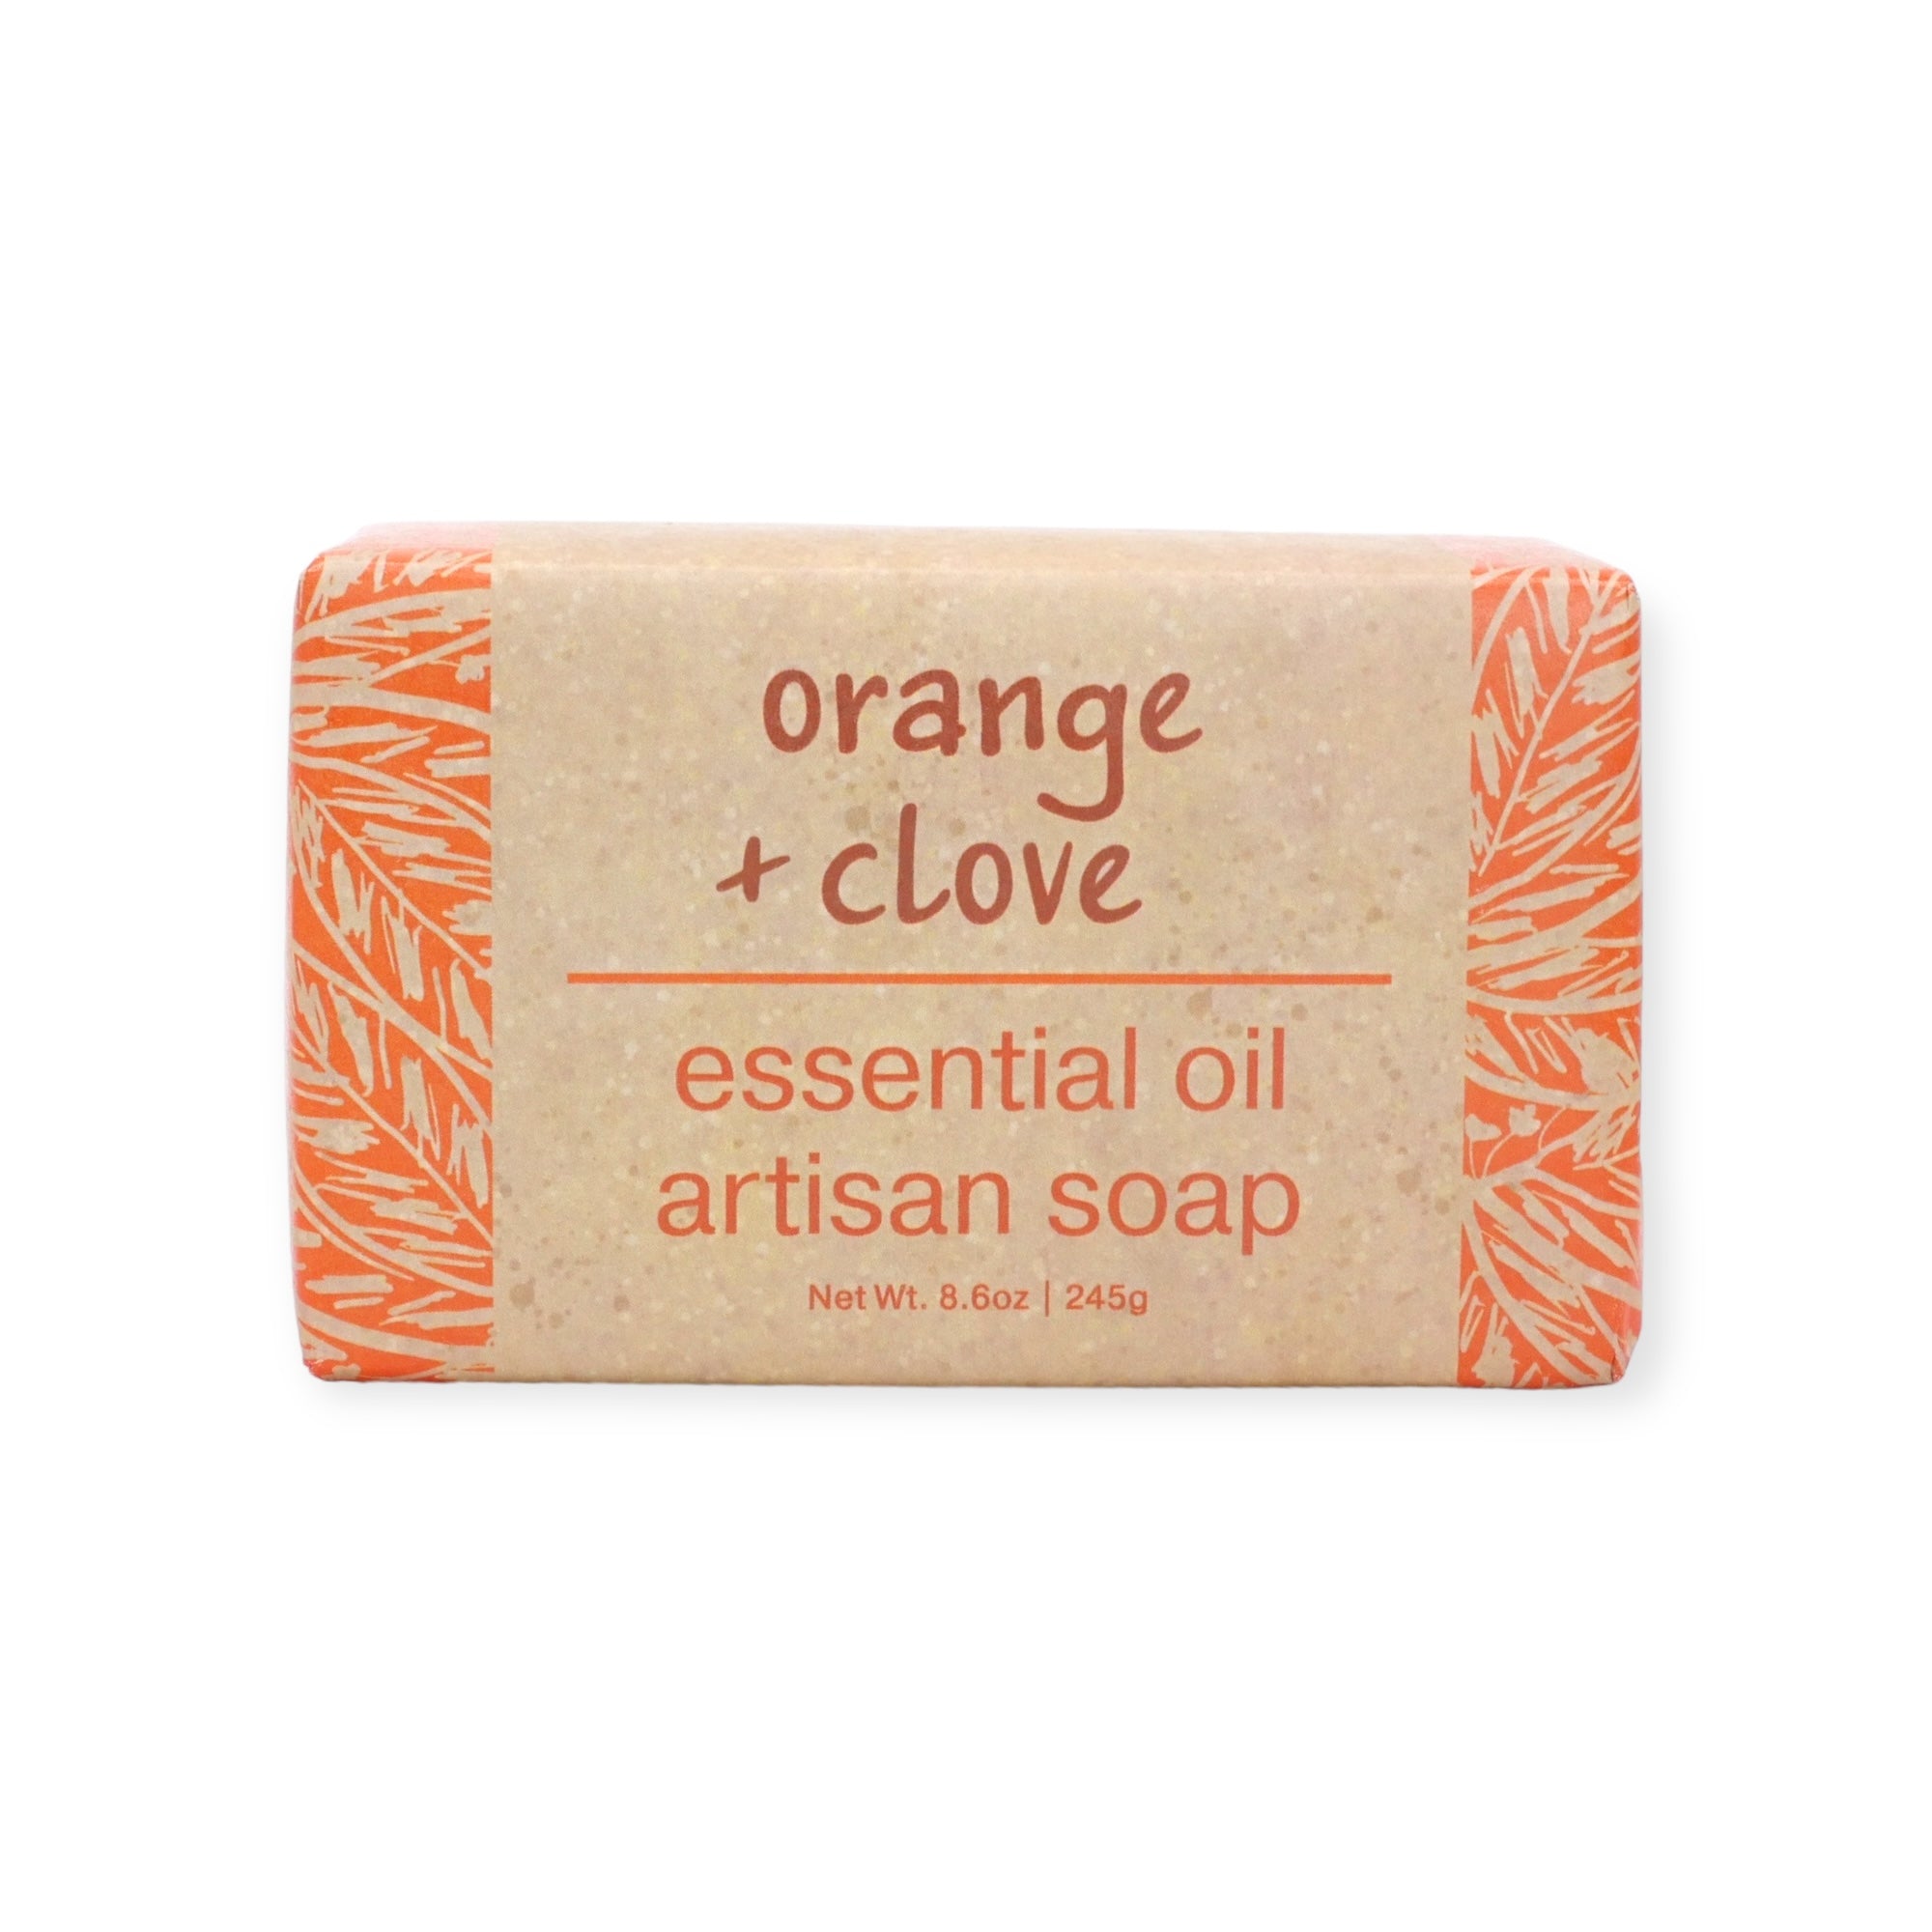 Orange + Clove Essential Oils Soap by Greenwich Bay Trading Co.